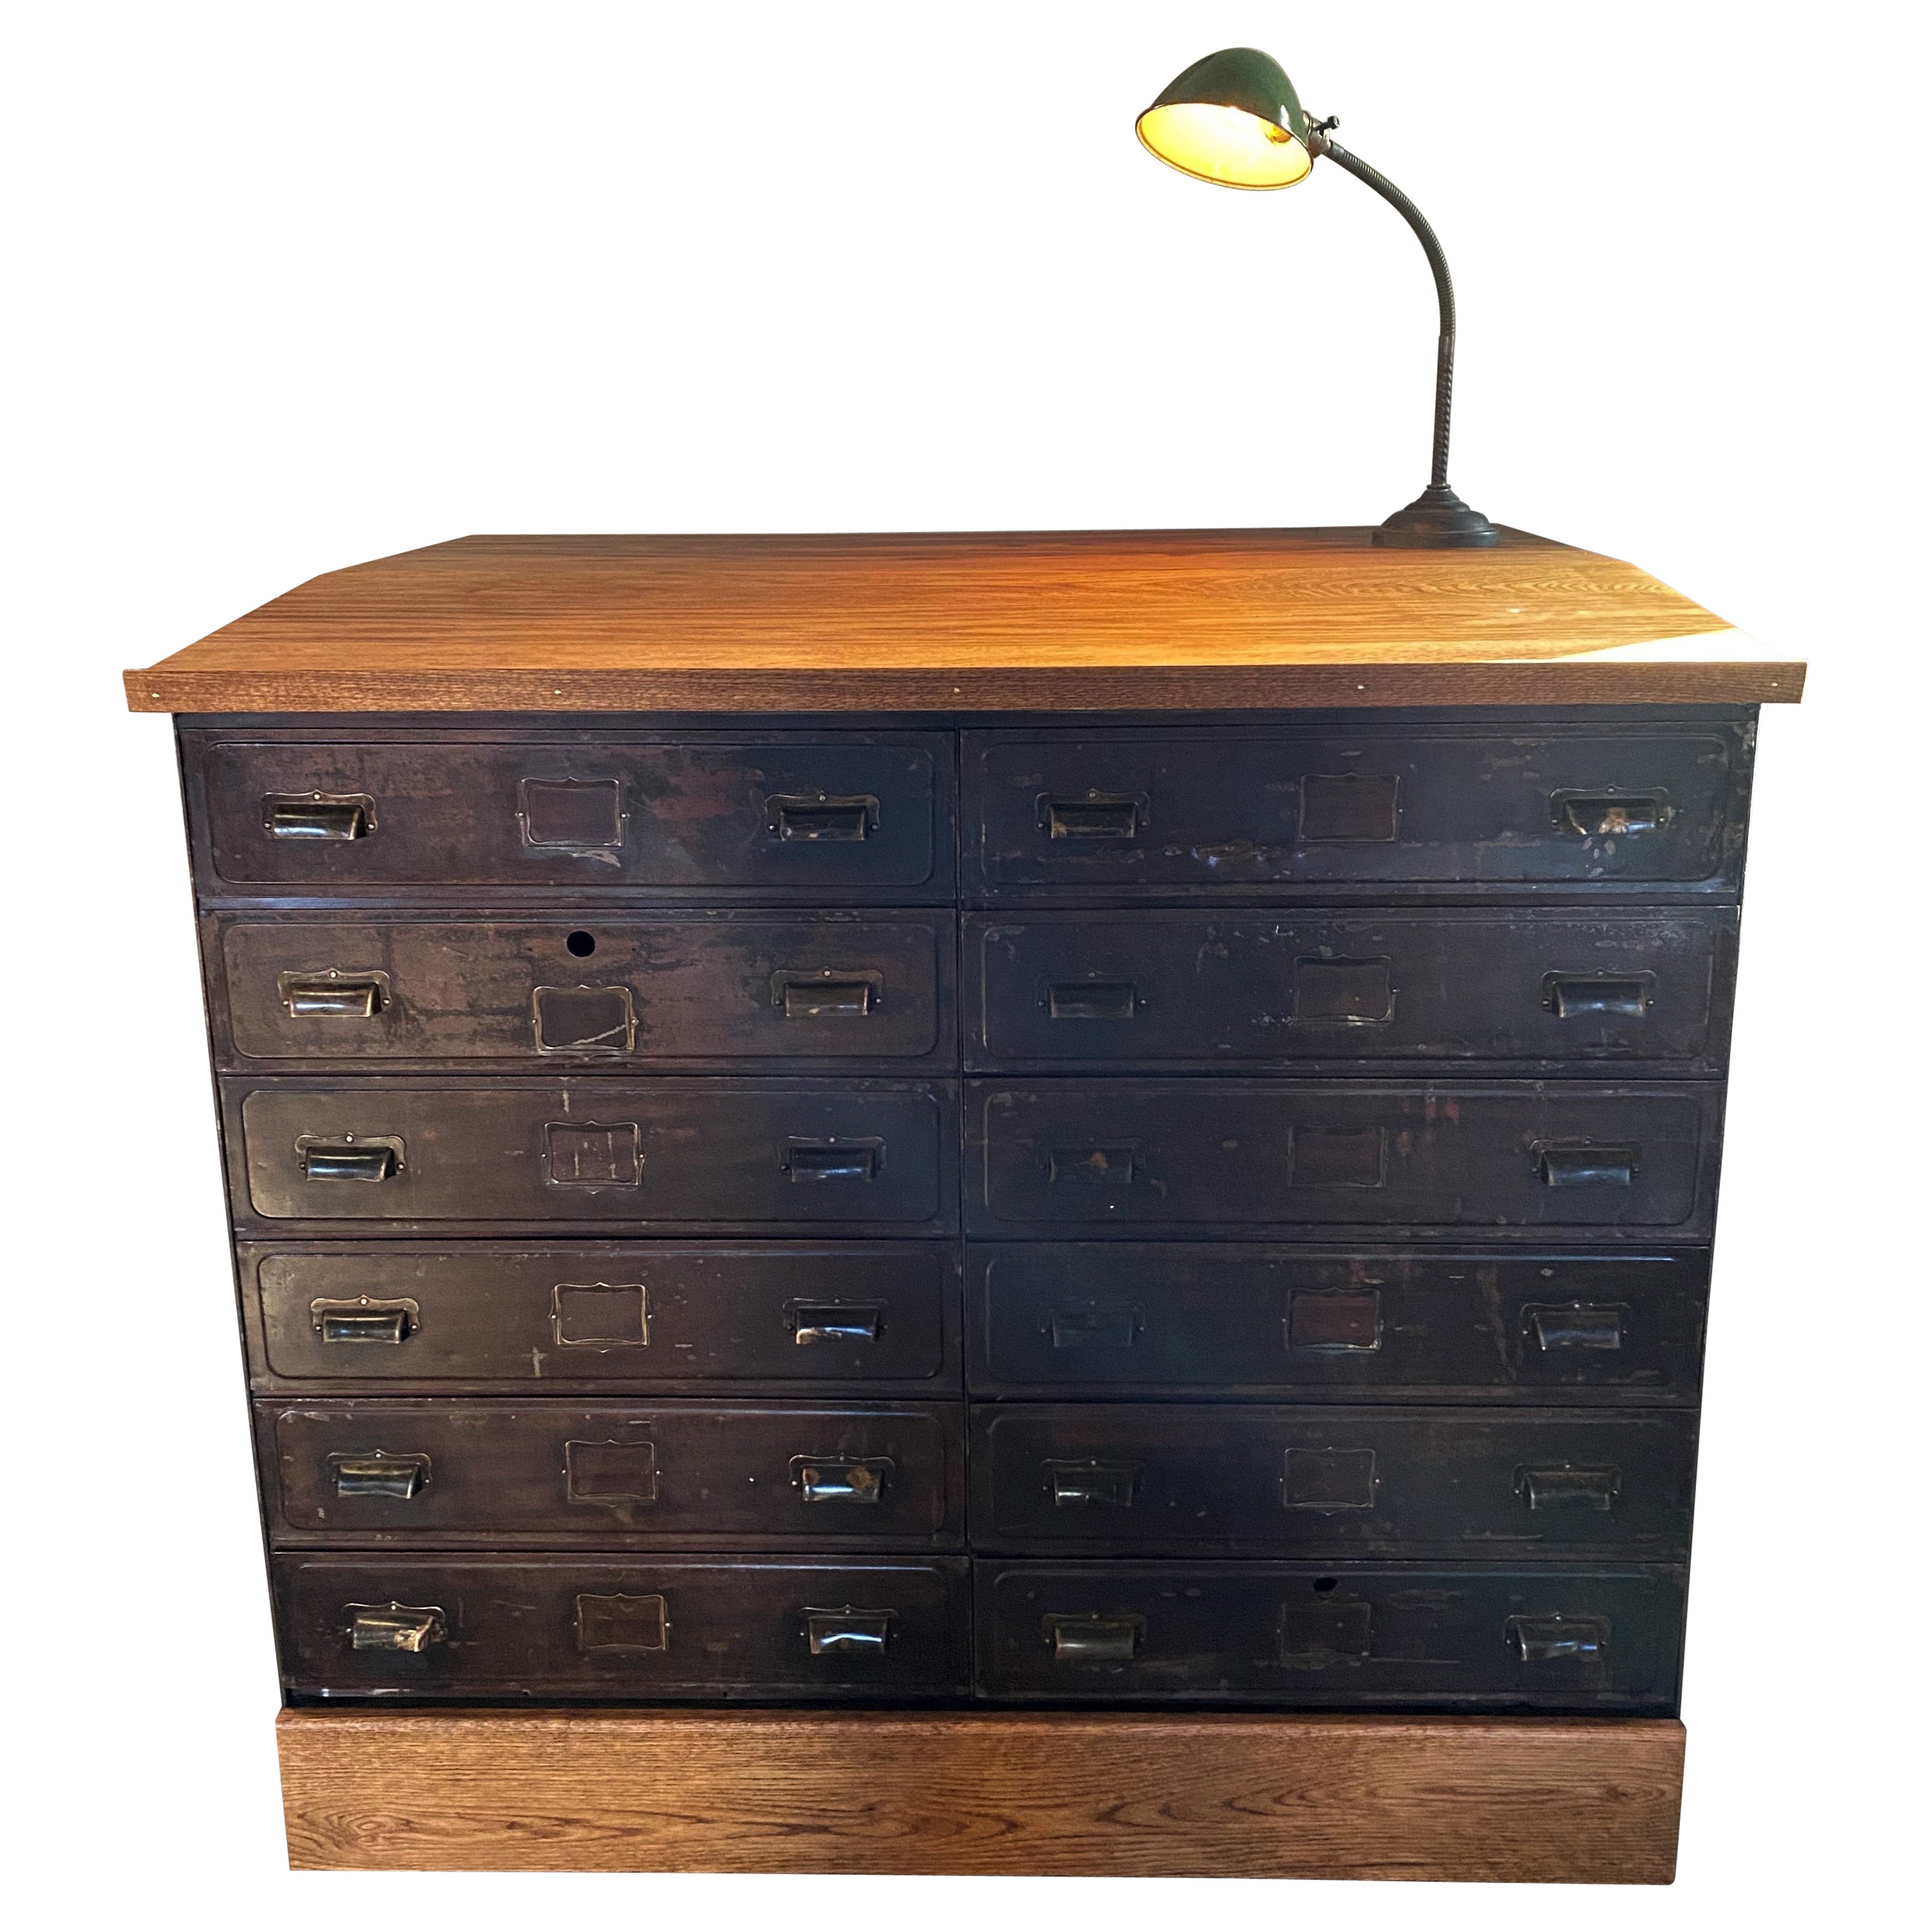 Vintage Industrial Slant Top Cabinet with Task Lamp For Sale